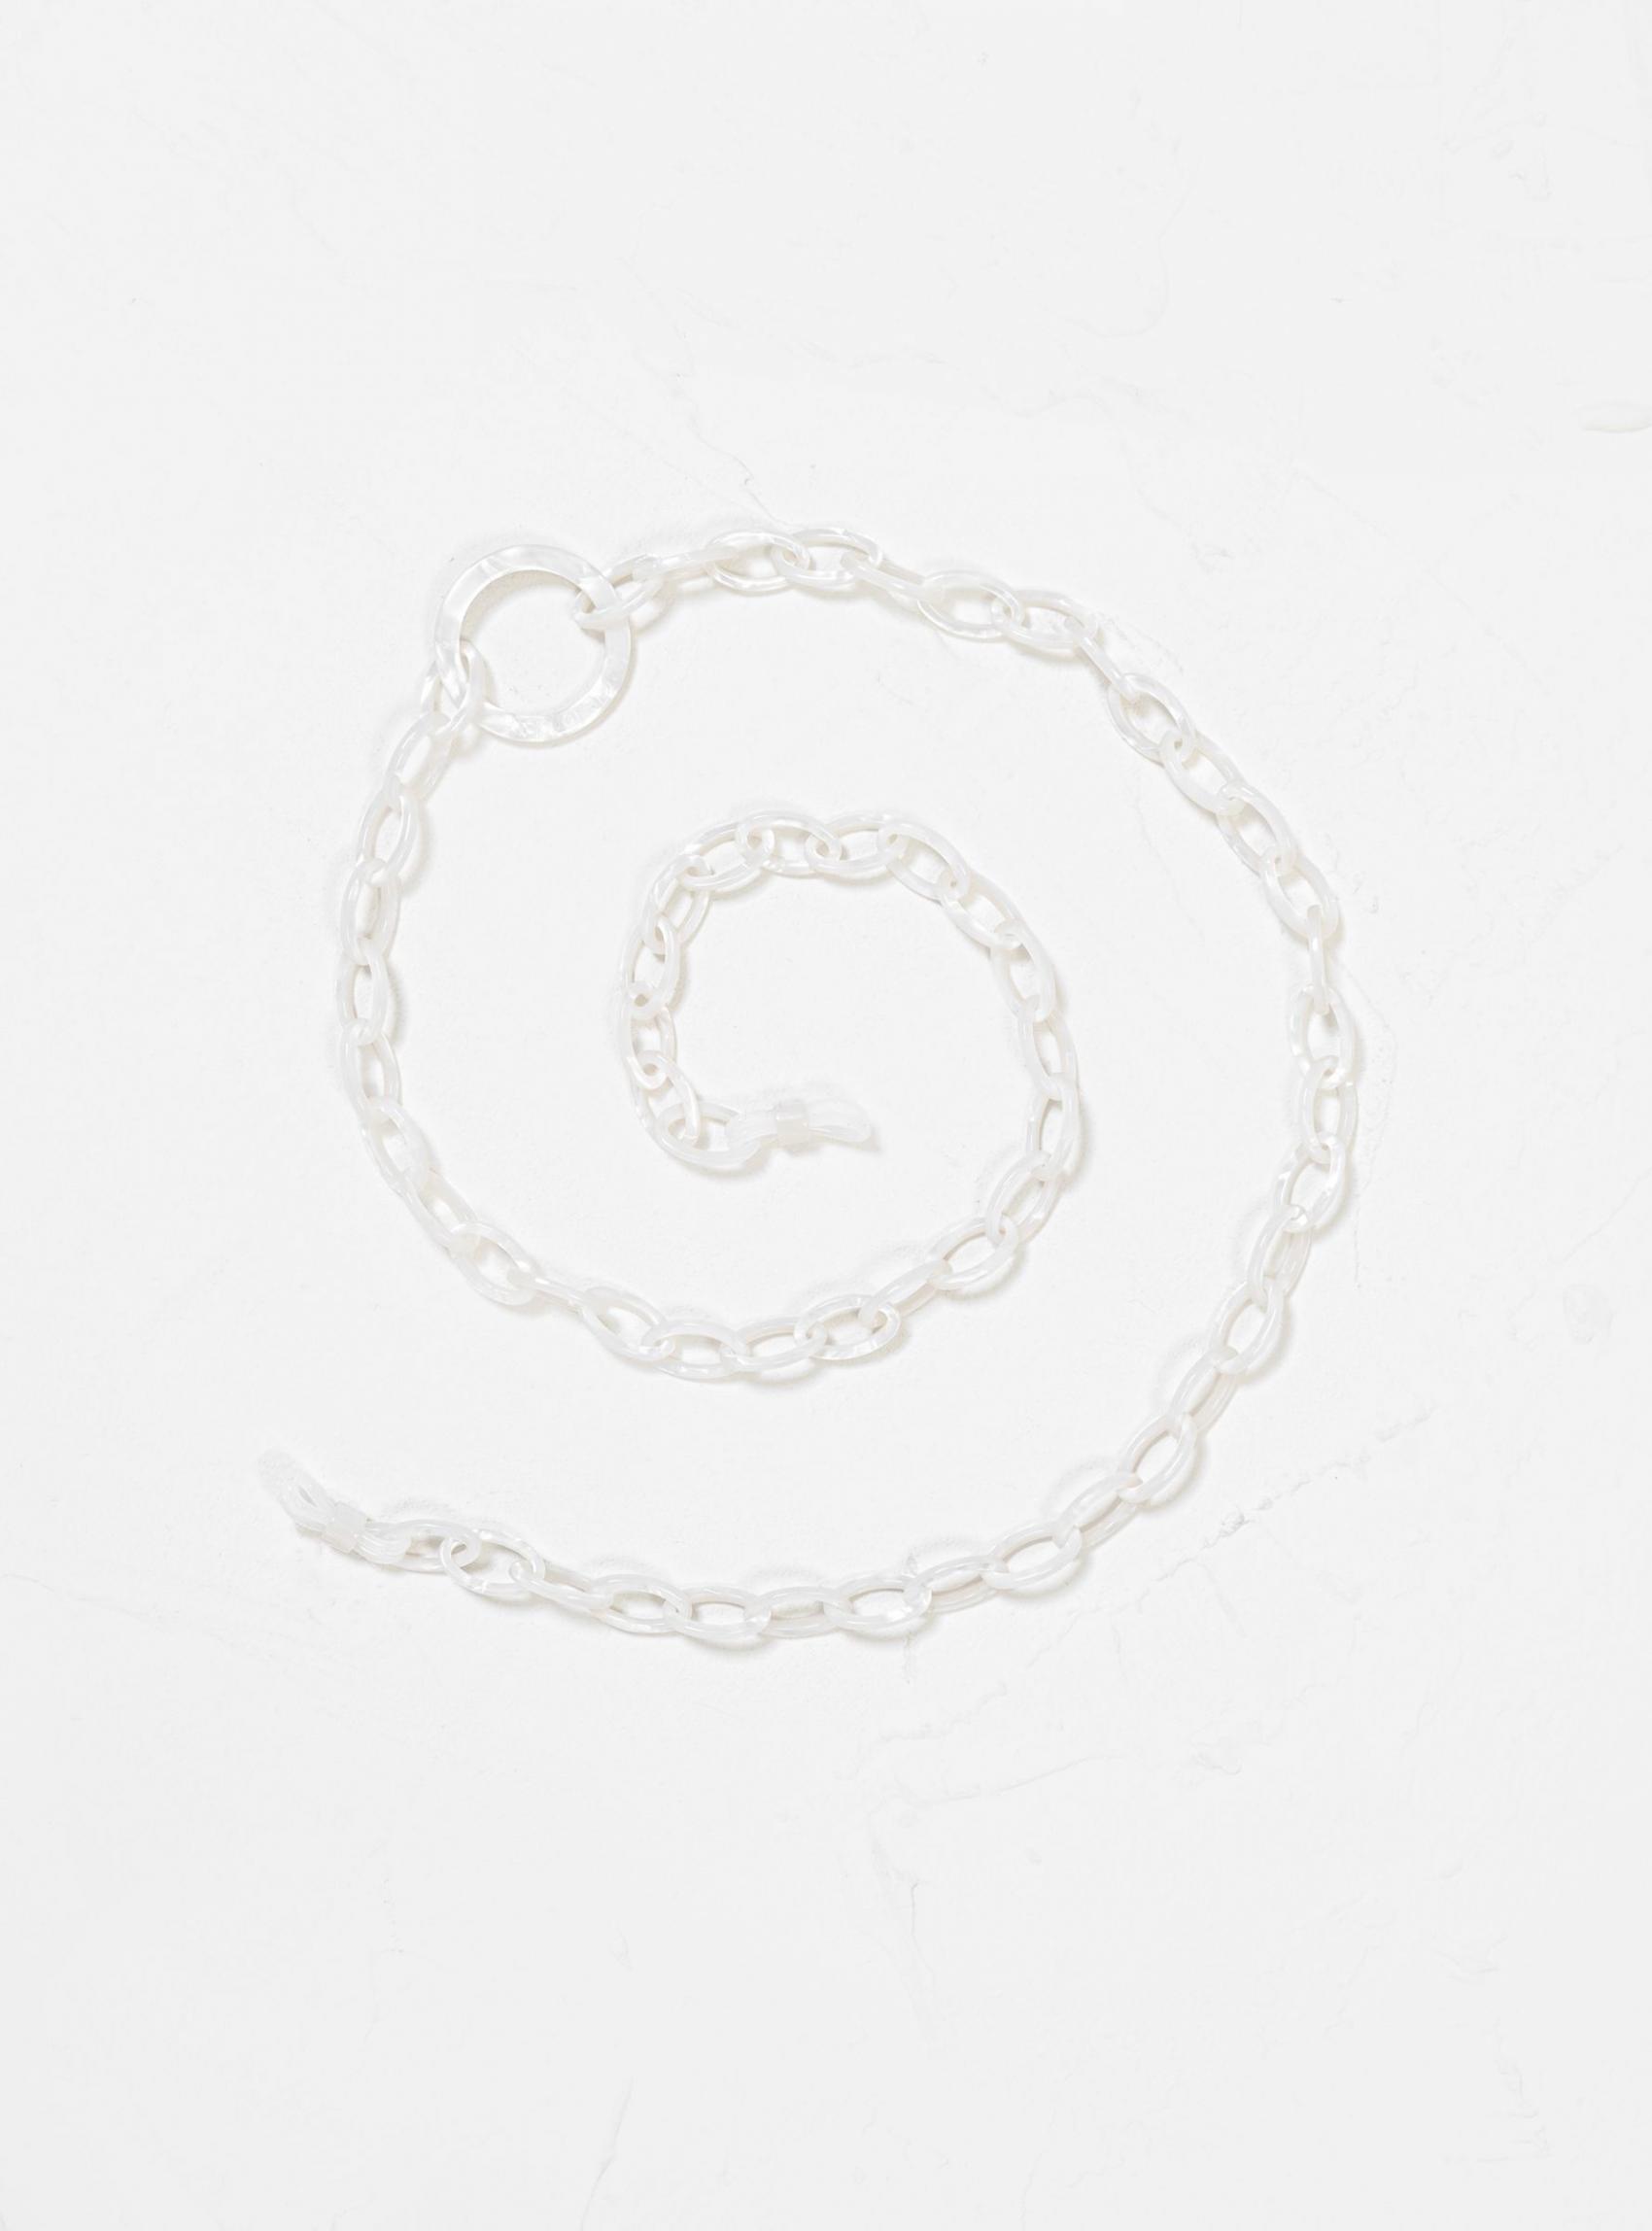 Accessories | Orris London Womens Smiley Glasses Chain Opal White White